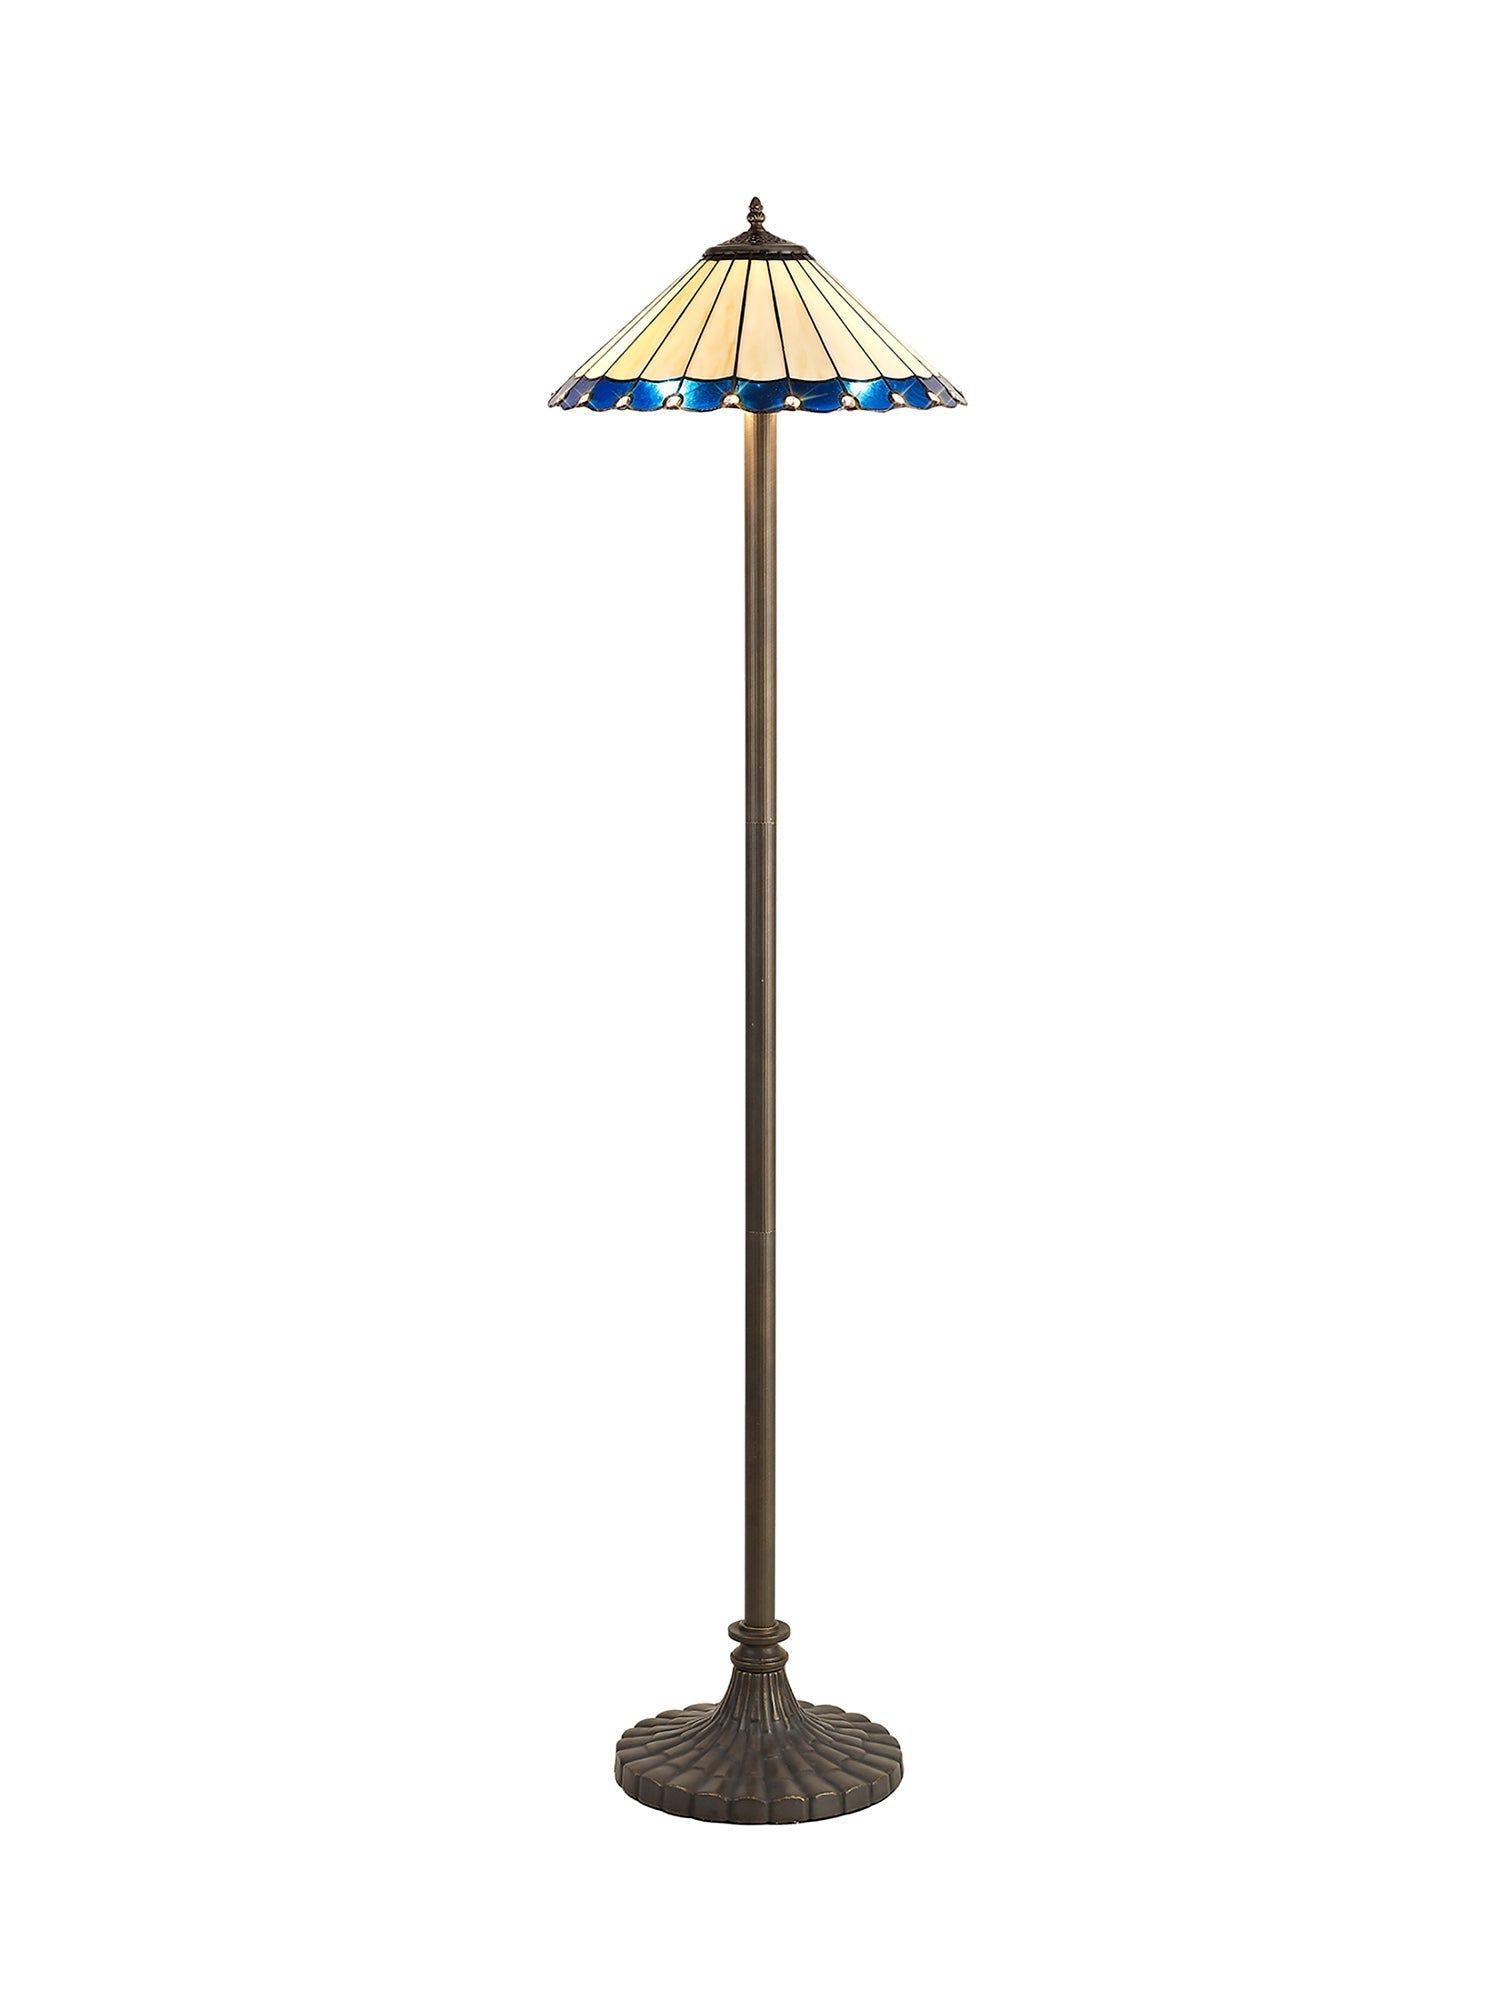 Sheitsr 2 Light Leaf, Octagonal, Stepped Design Floor Lamp E27 With 40cm Tiffany Shade